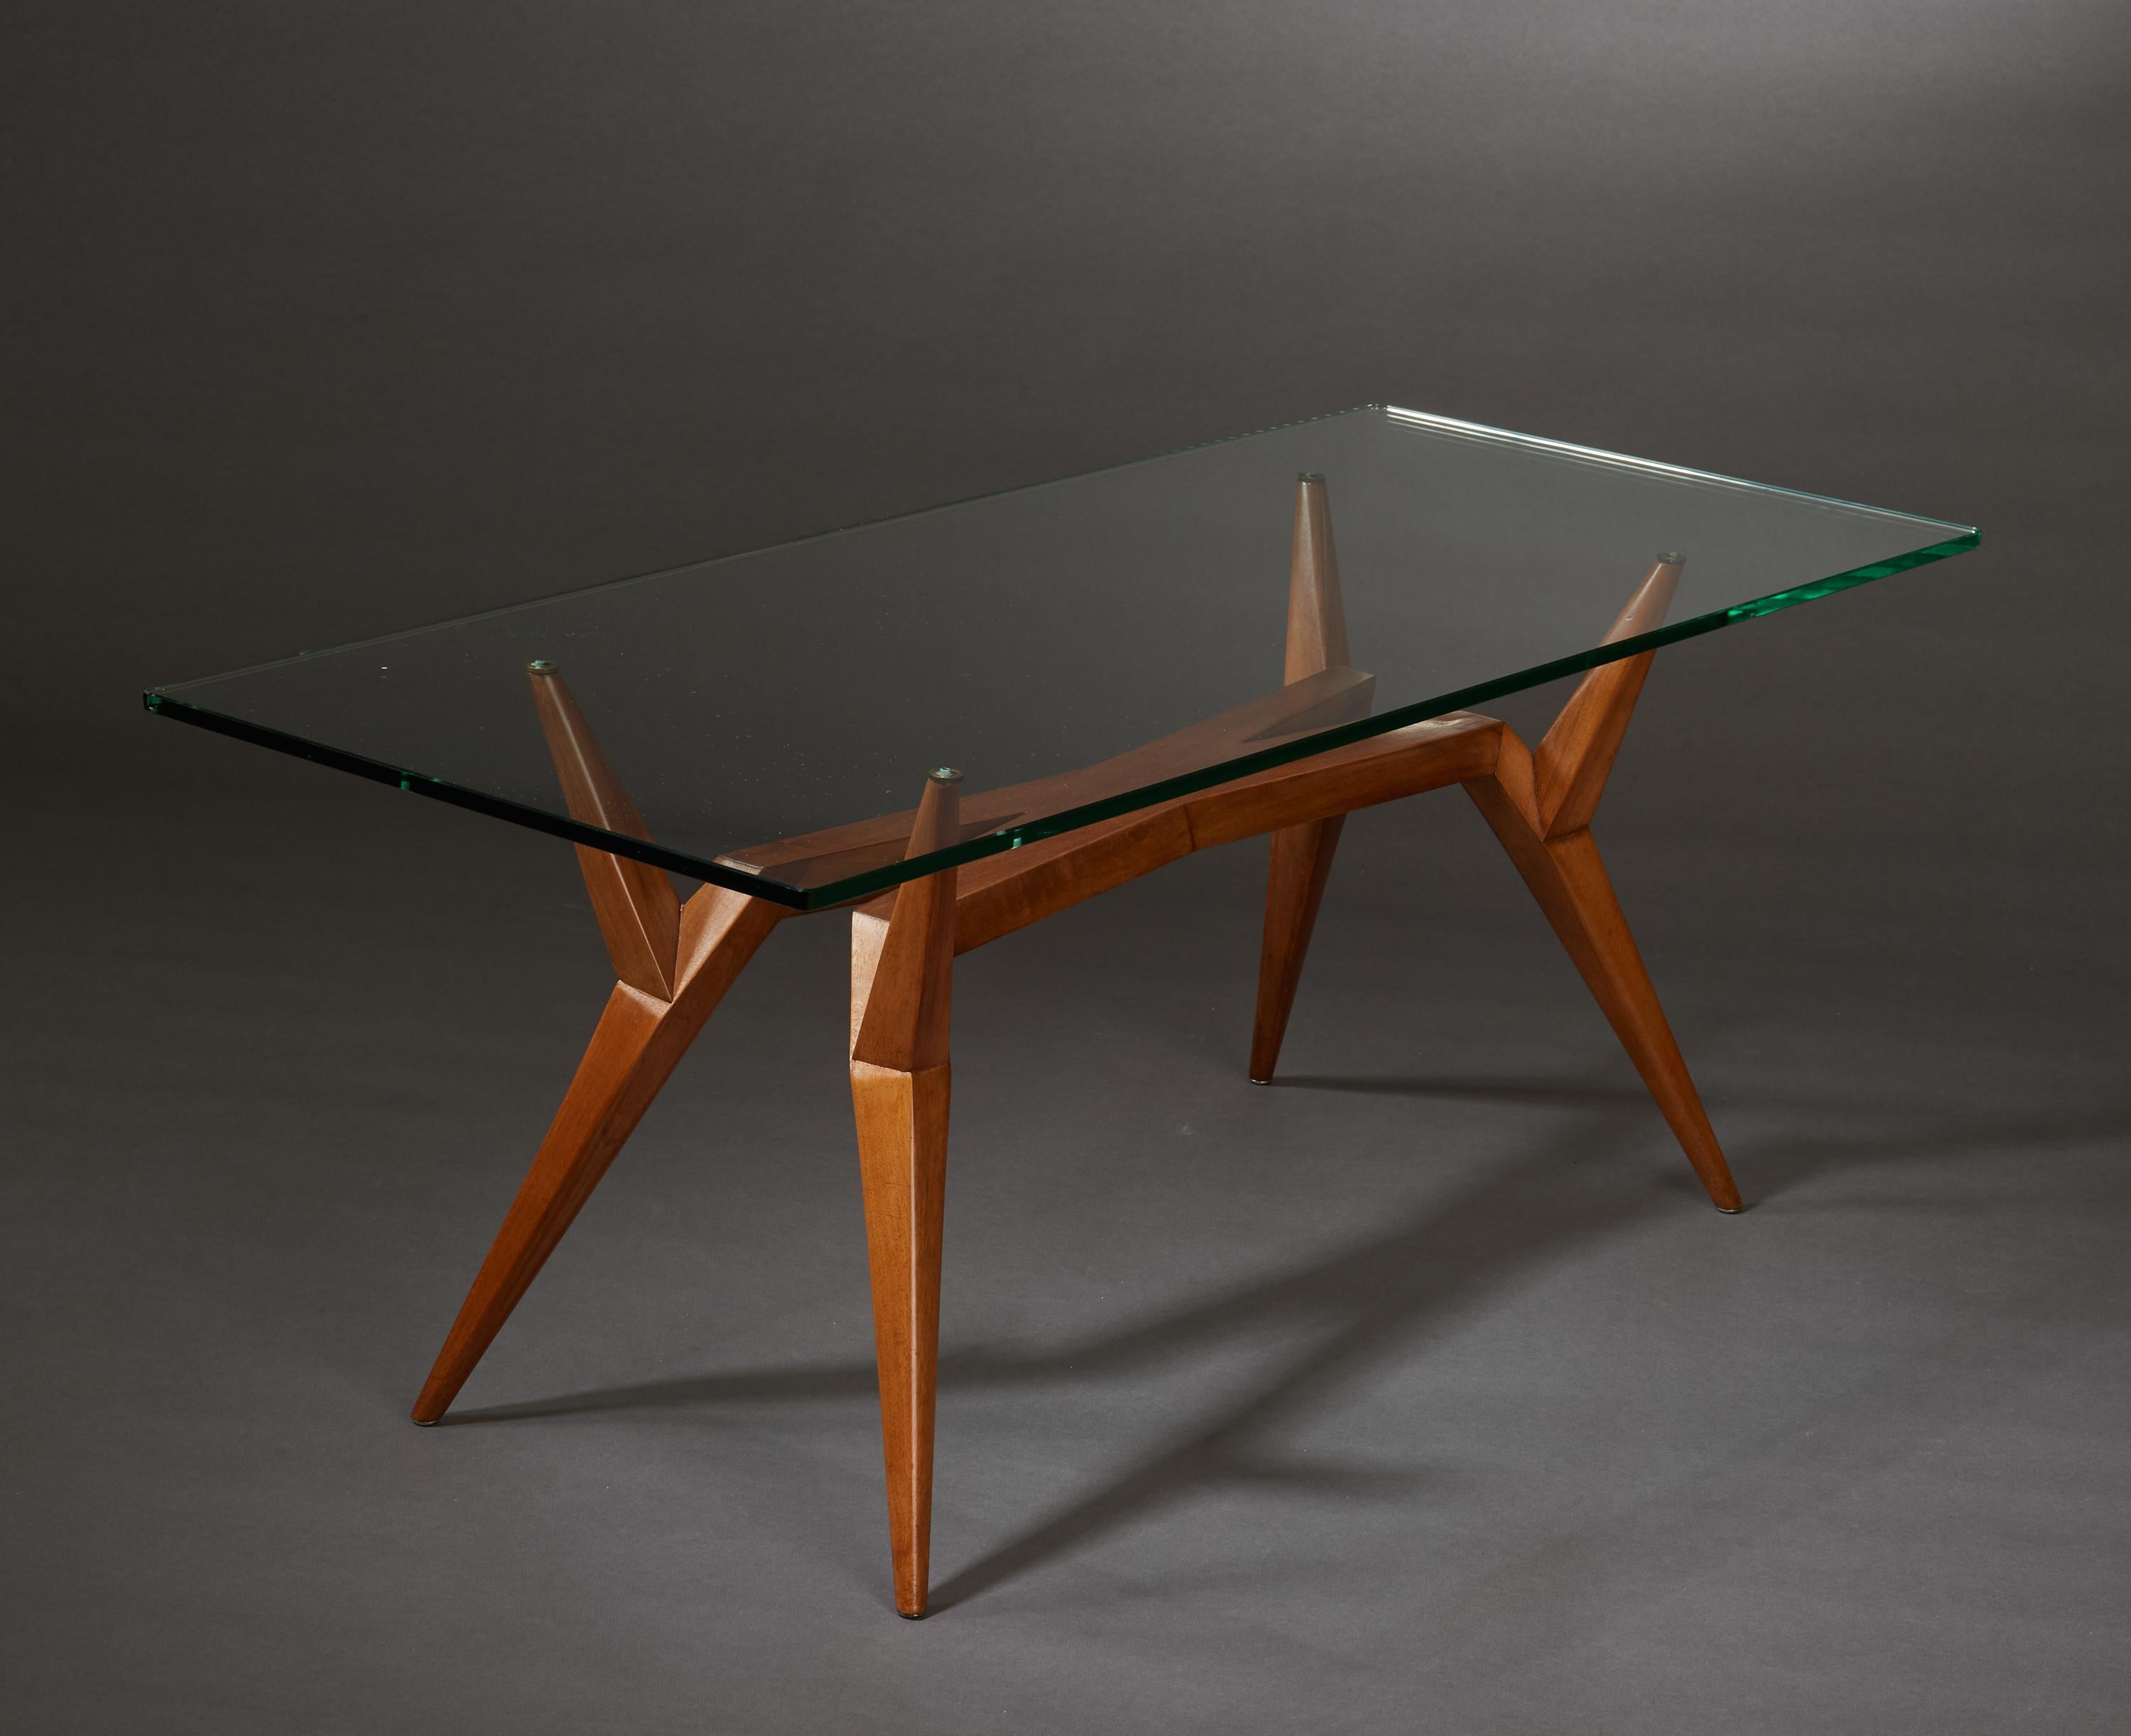 Italian Pierluigi Giordani Rare Constructivist Coffee Table in Wood & Glass, Italy 1950s For Sale